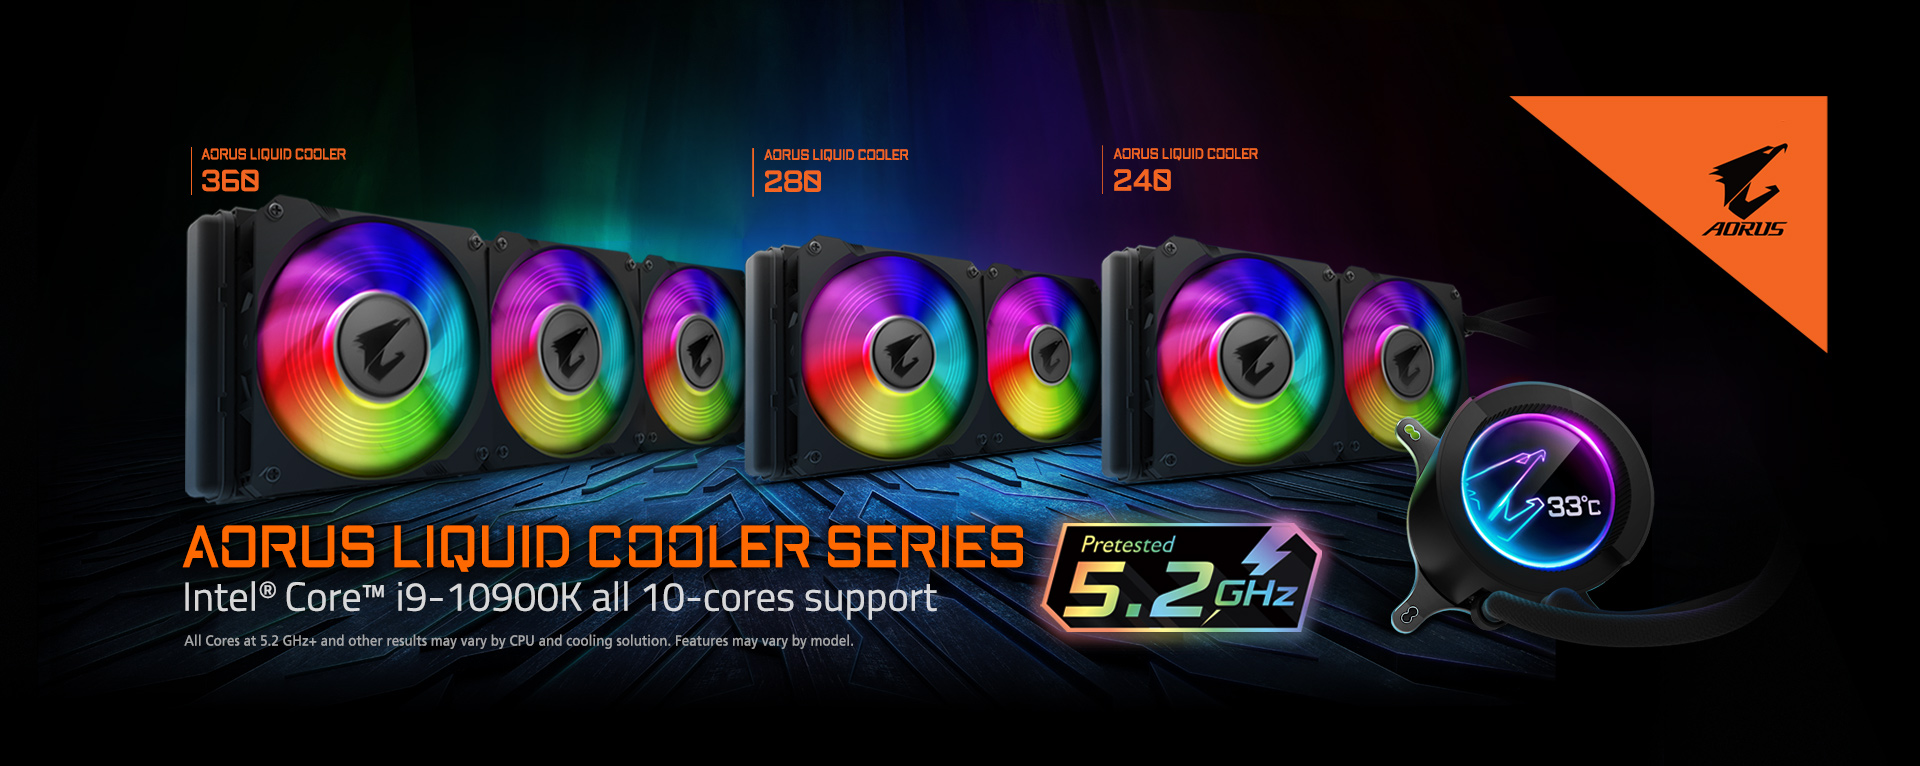 AORUS RGB Liquid Cooler 280 - Liquid cooling system CPU water block - LGA1151 Socket / LGA1155 AORUS - en Elite Center